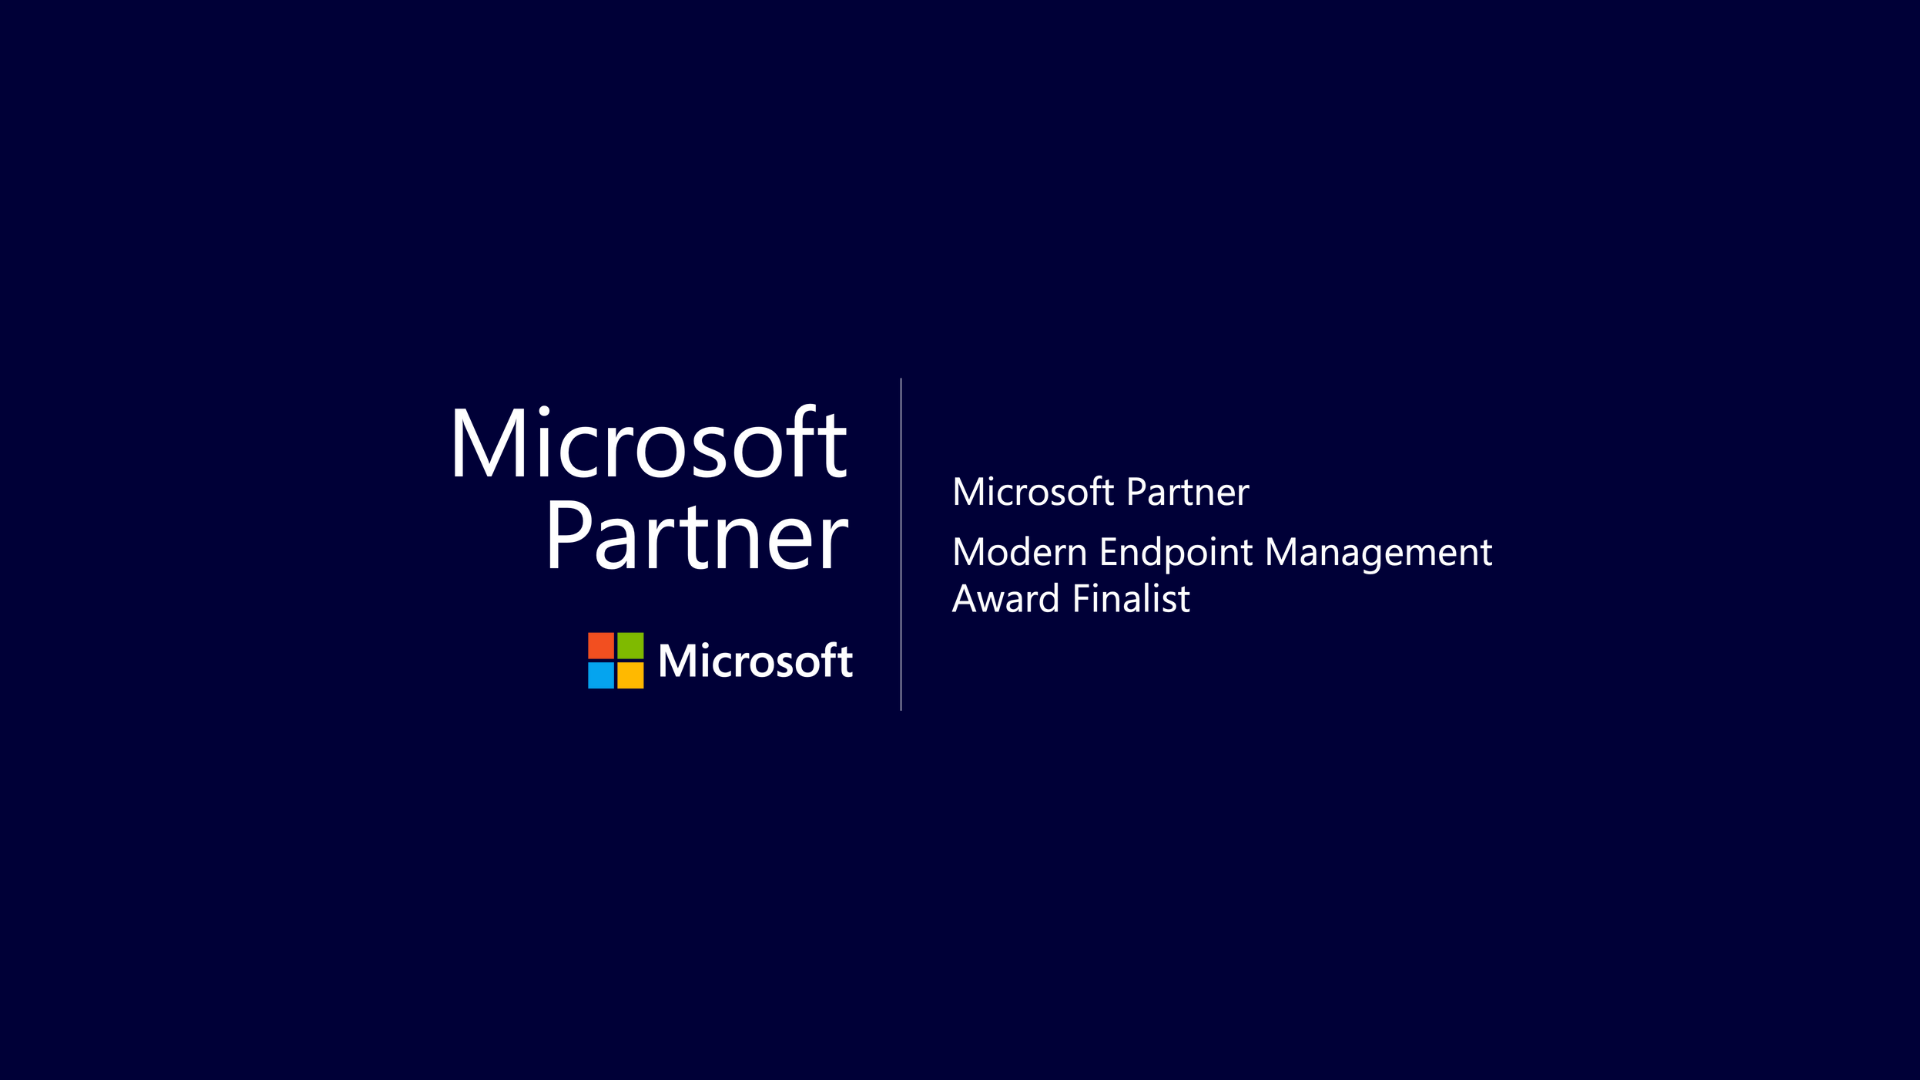 Microsoft Partner Award Finalist